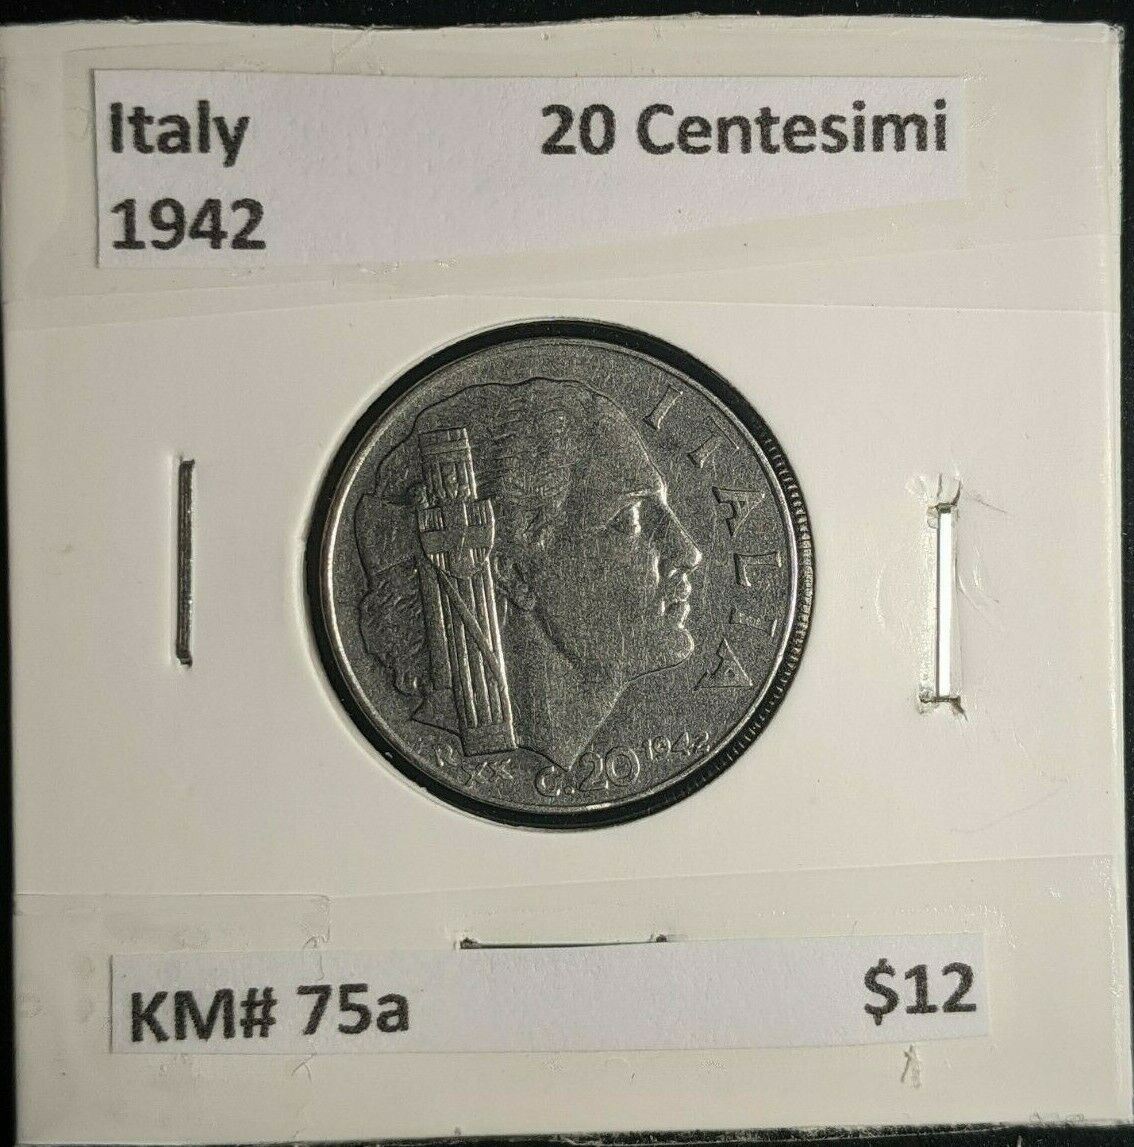 Italy 1942 20 Centesimi KM# 75a #013